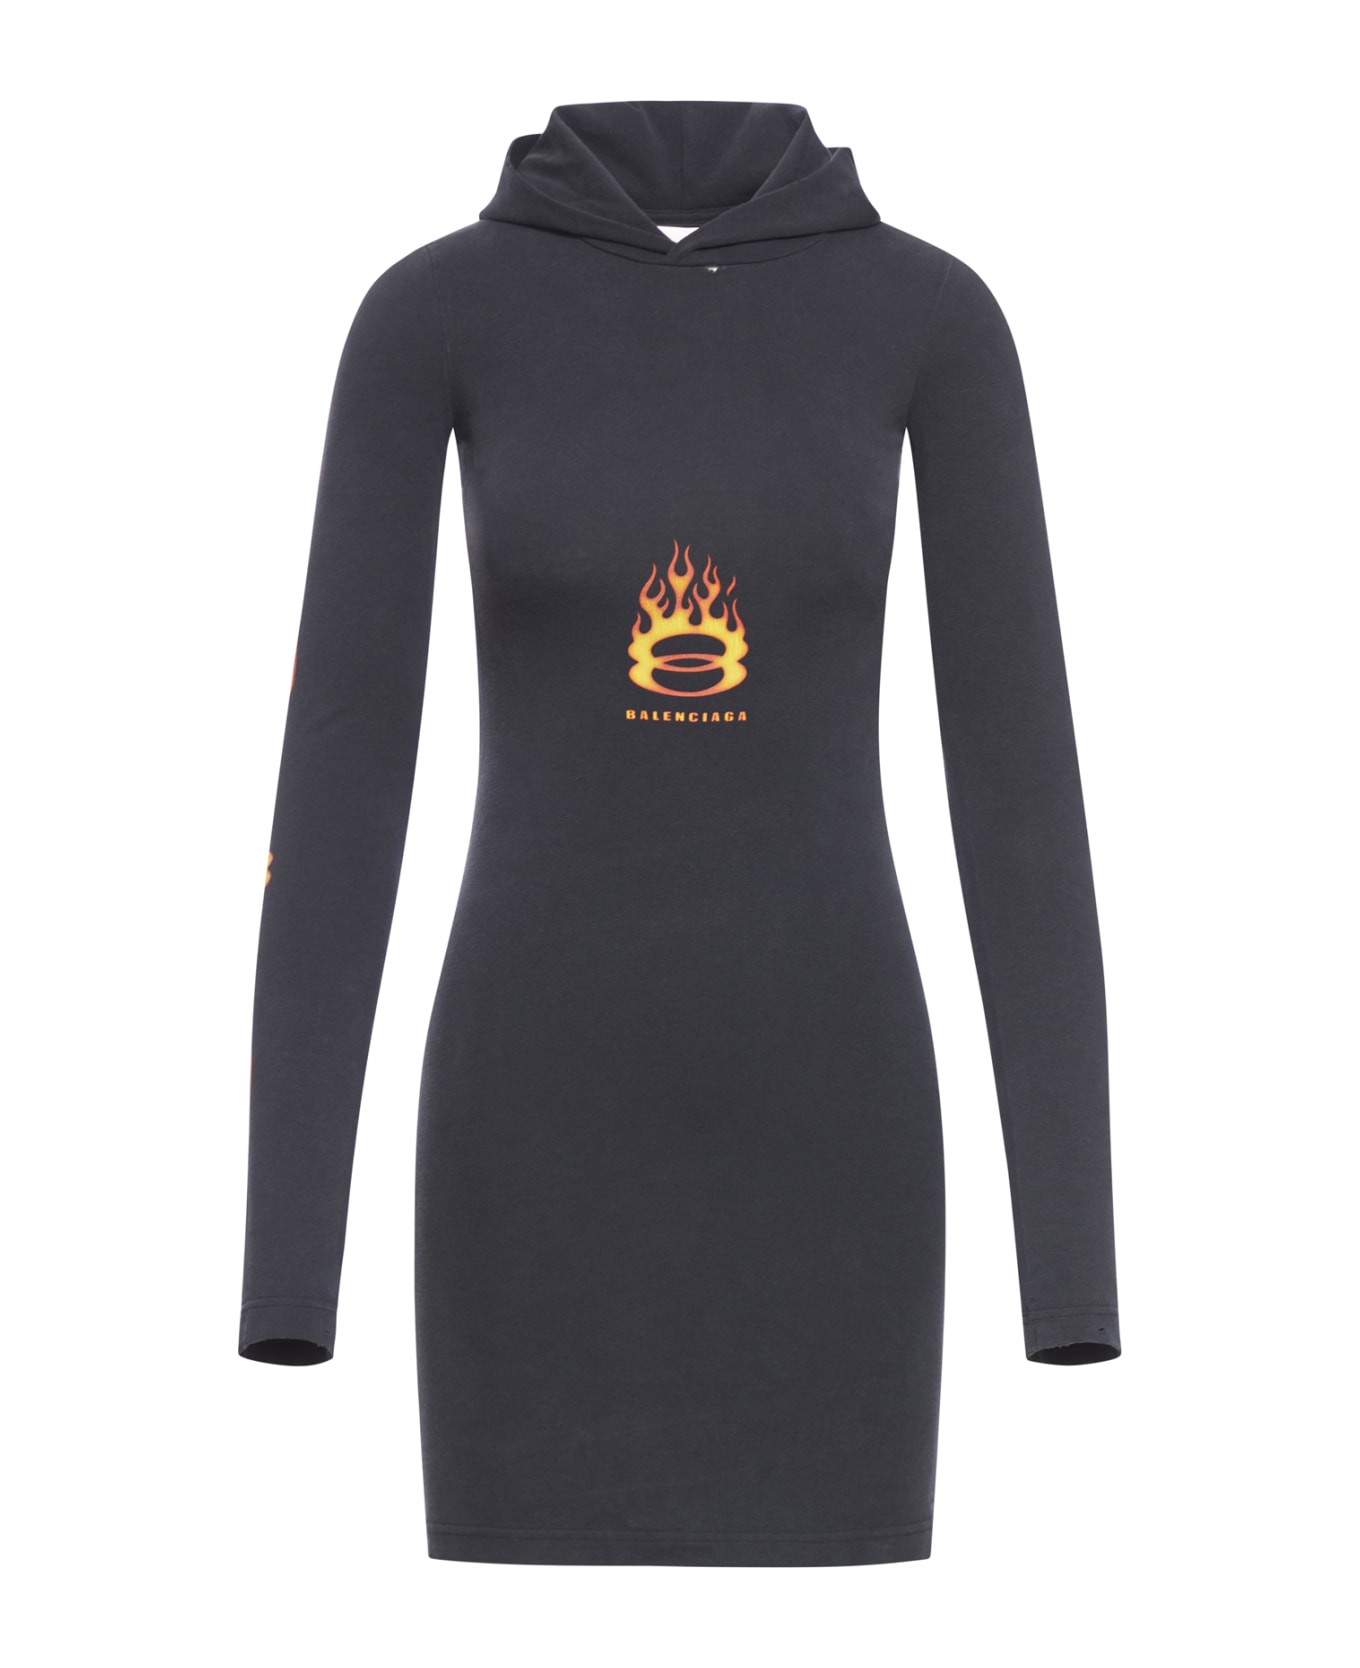 Balenciaga Hooded Dress Burning Unity Stretch Plg Jrsy - Washed Out Black